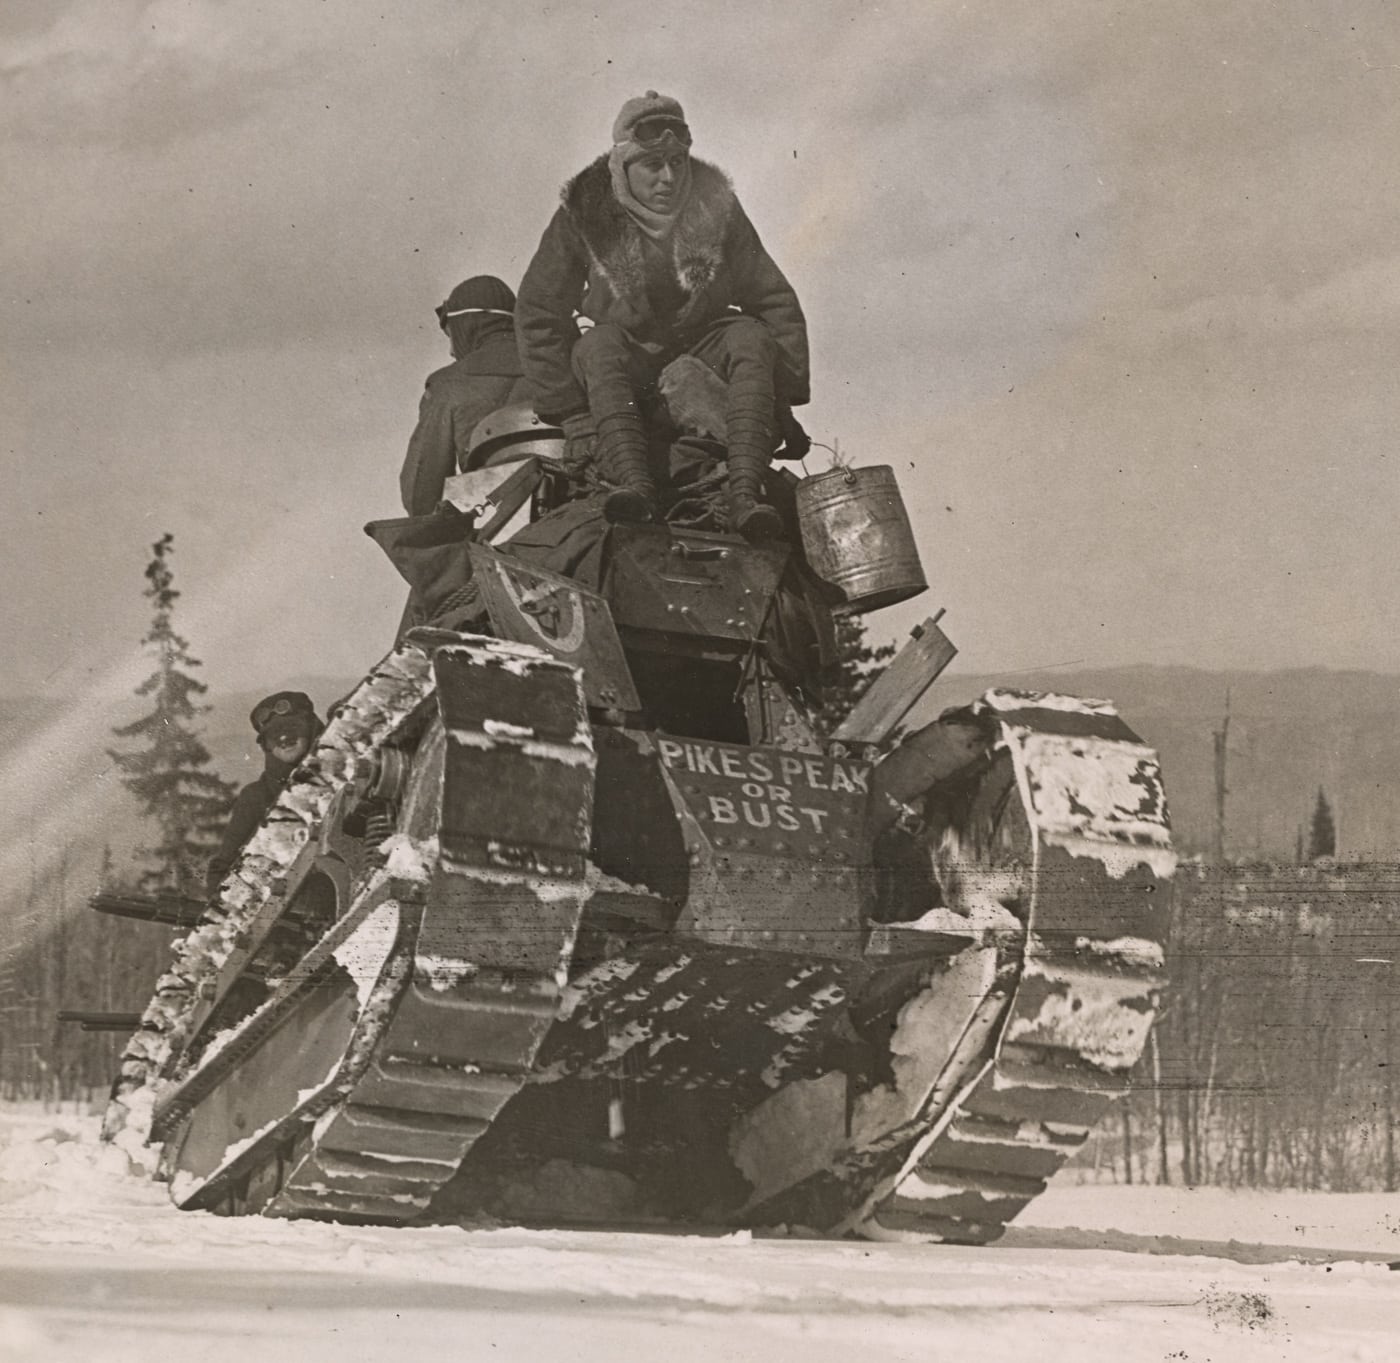 Victory Loan Model 1917 tank climbs Pikes Peak